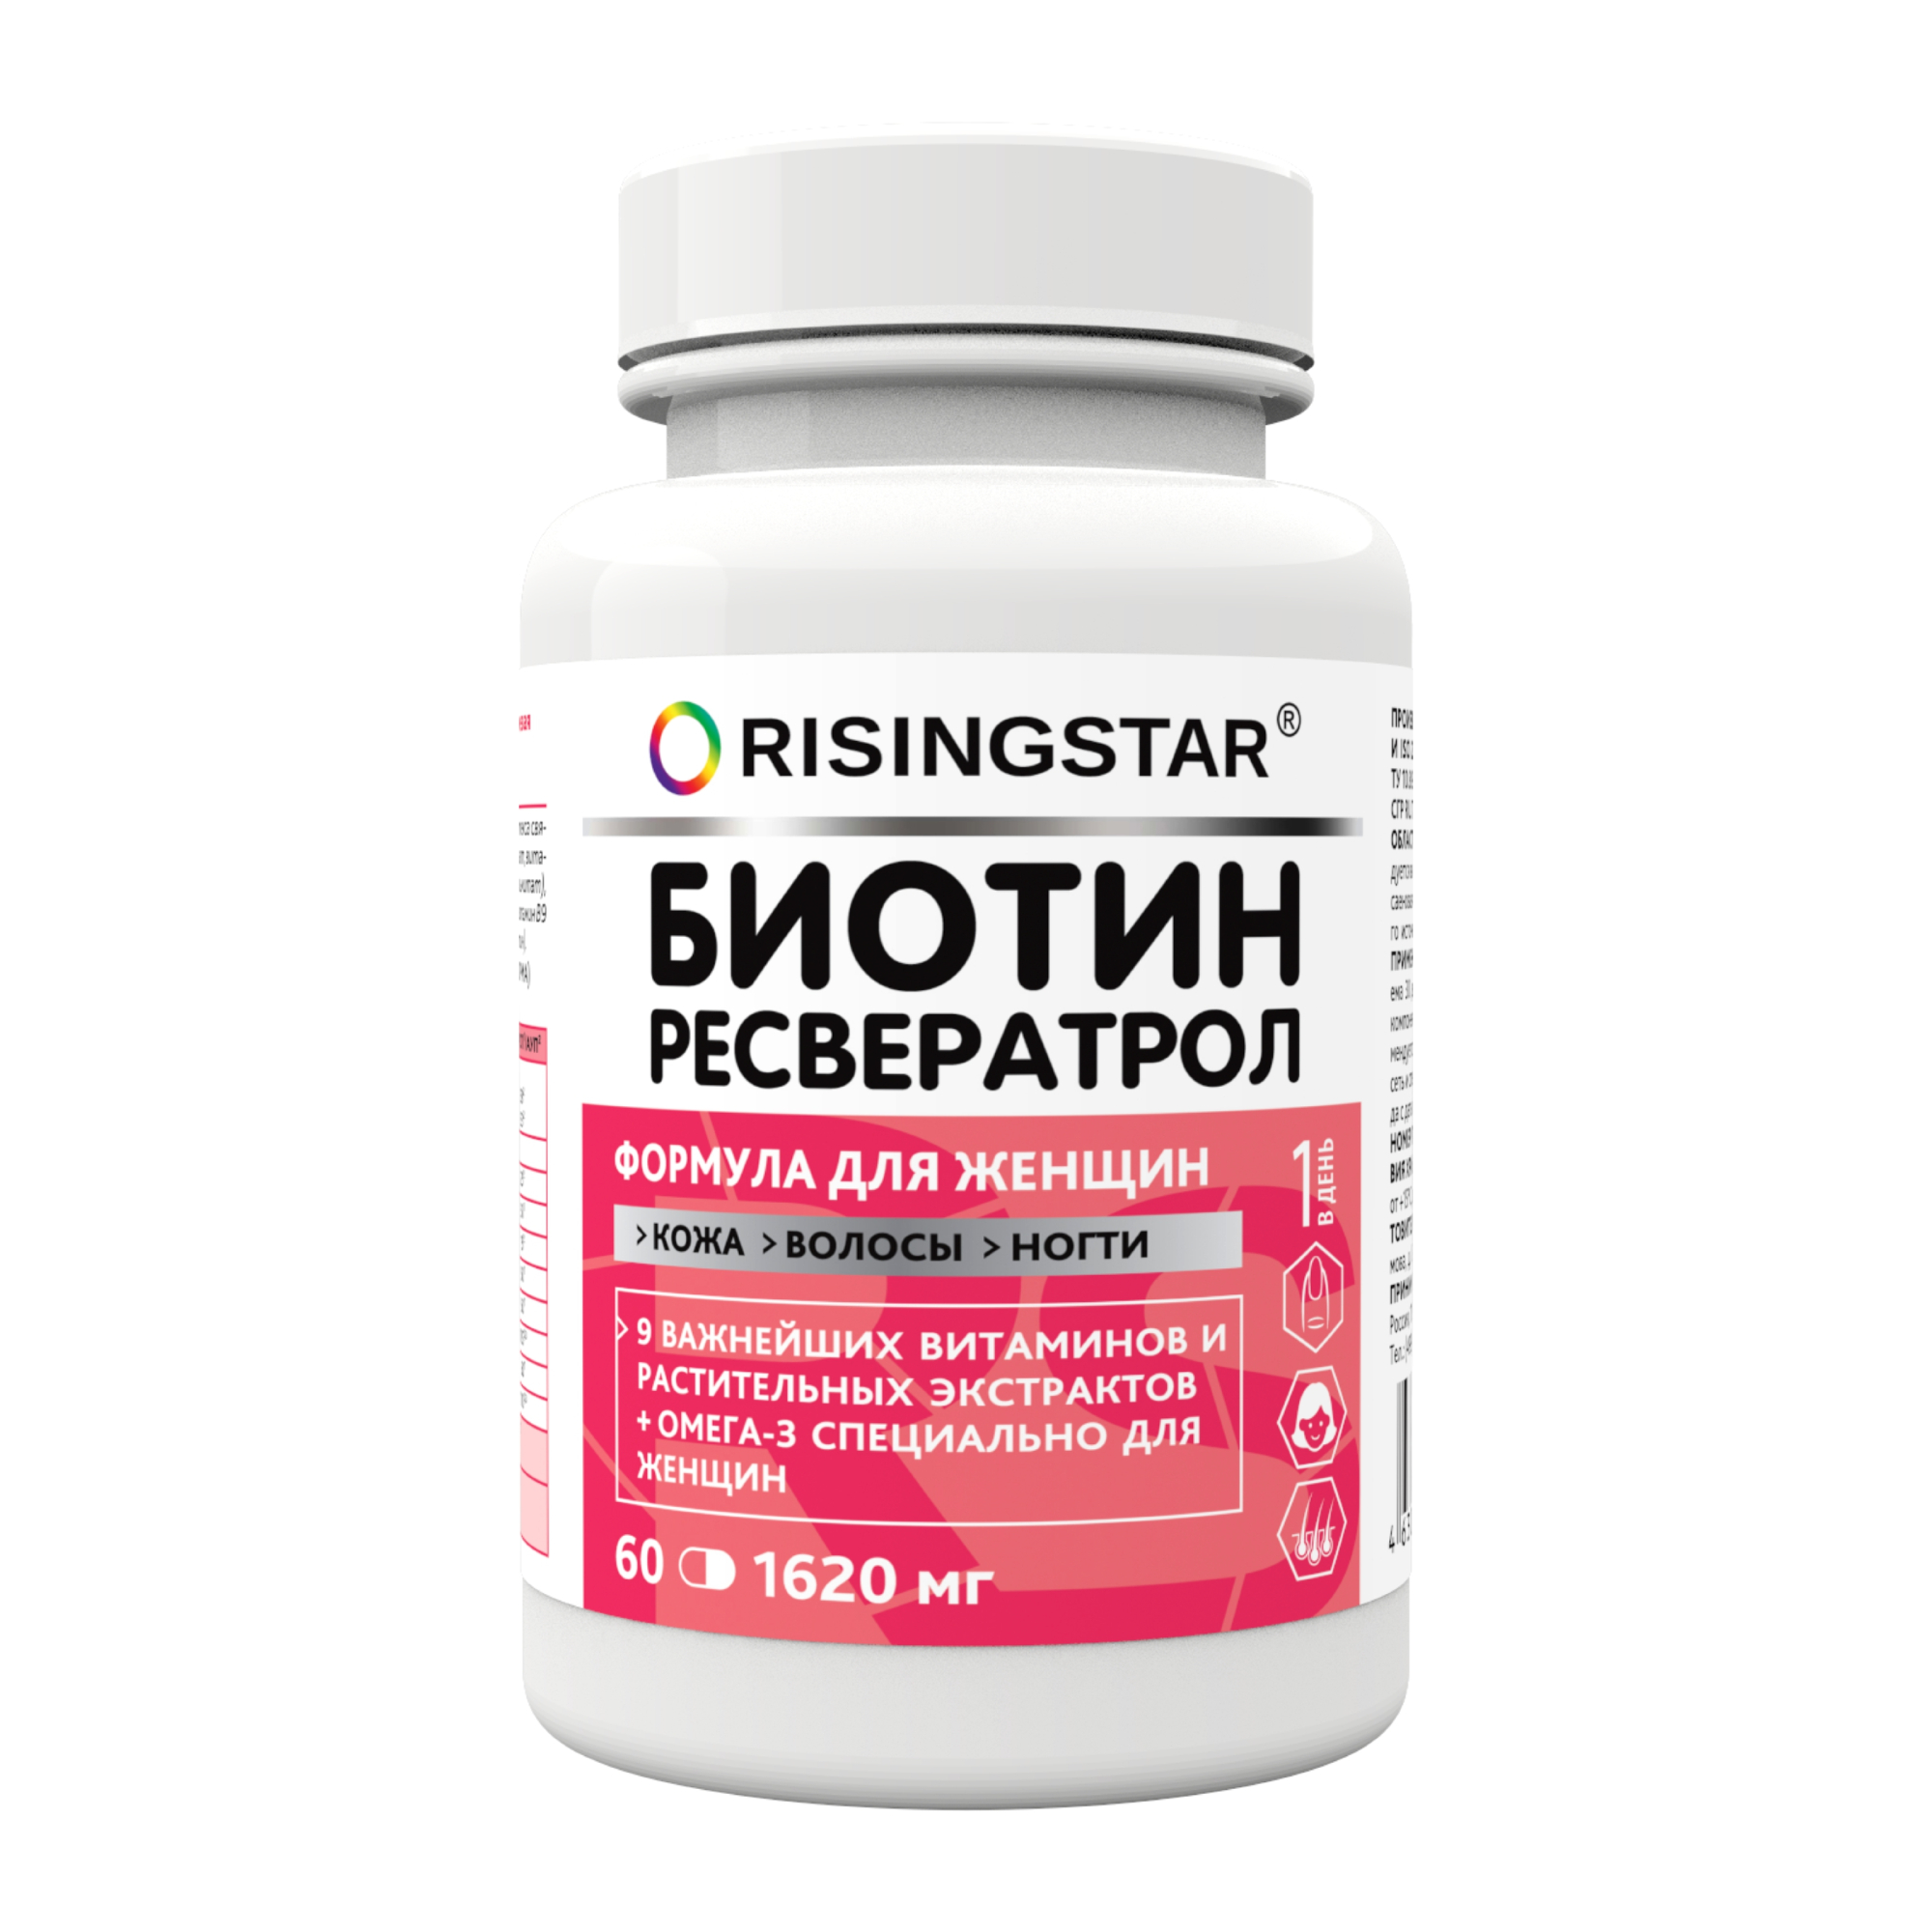 БАД Risingstar биотин+фолиевая кислота с омега-3 для женщин 60 таблеток, 100 г - фото 1